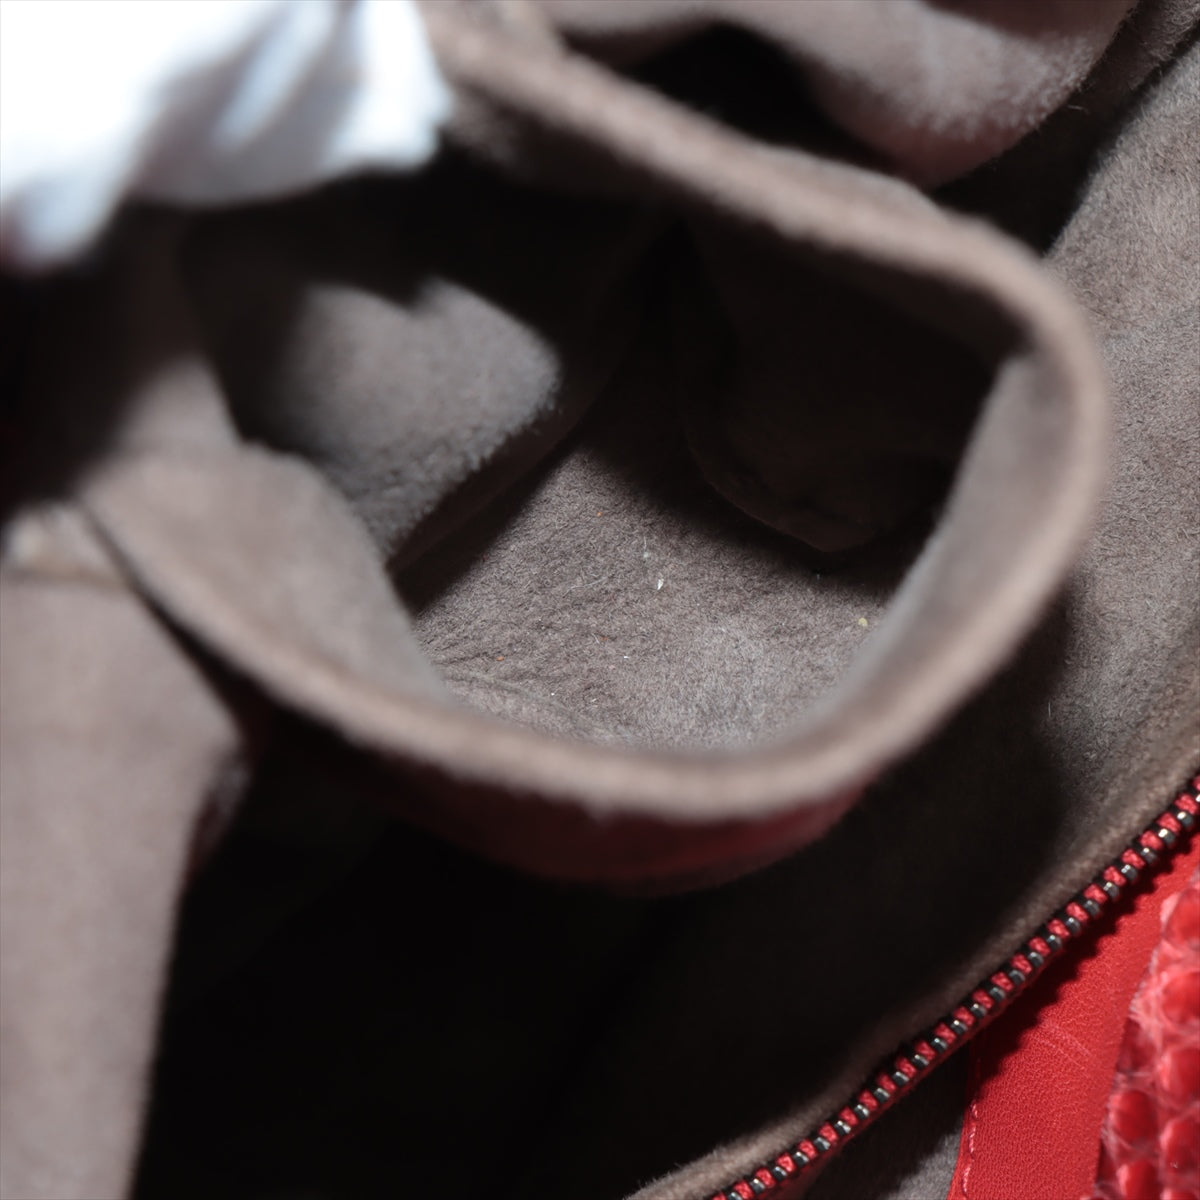 Bottega Veneta Pyson Tote Bag Red Mirrored